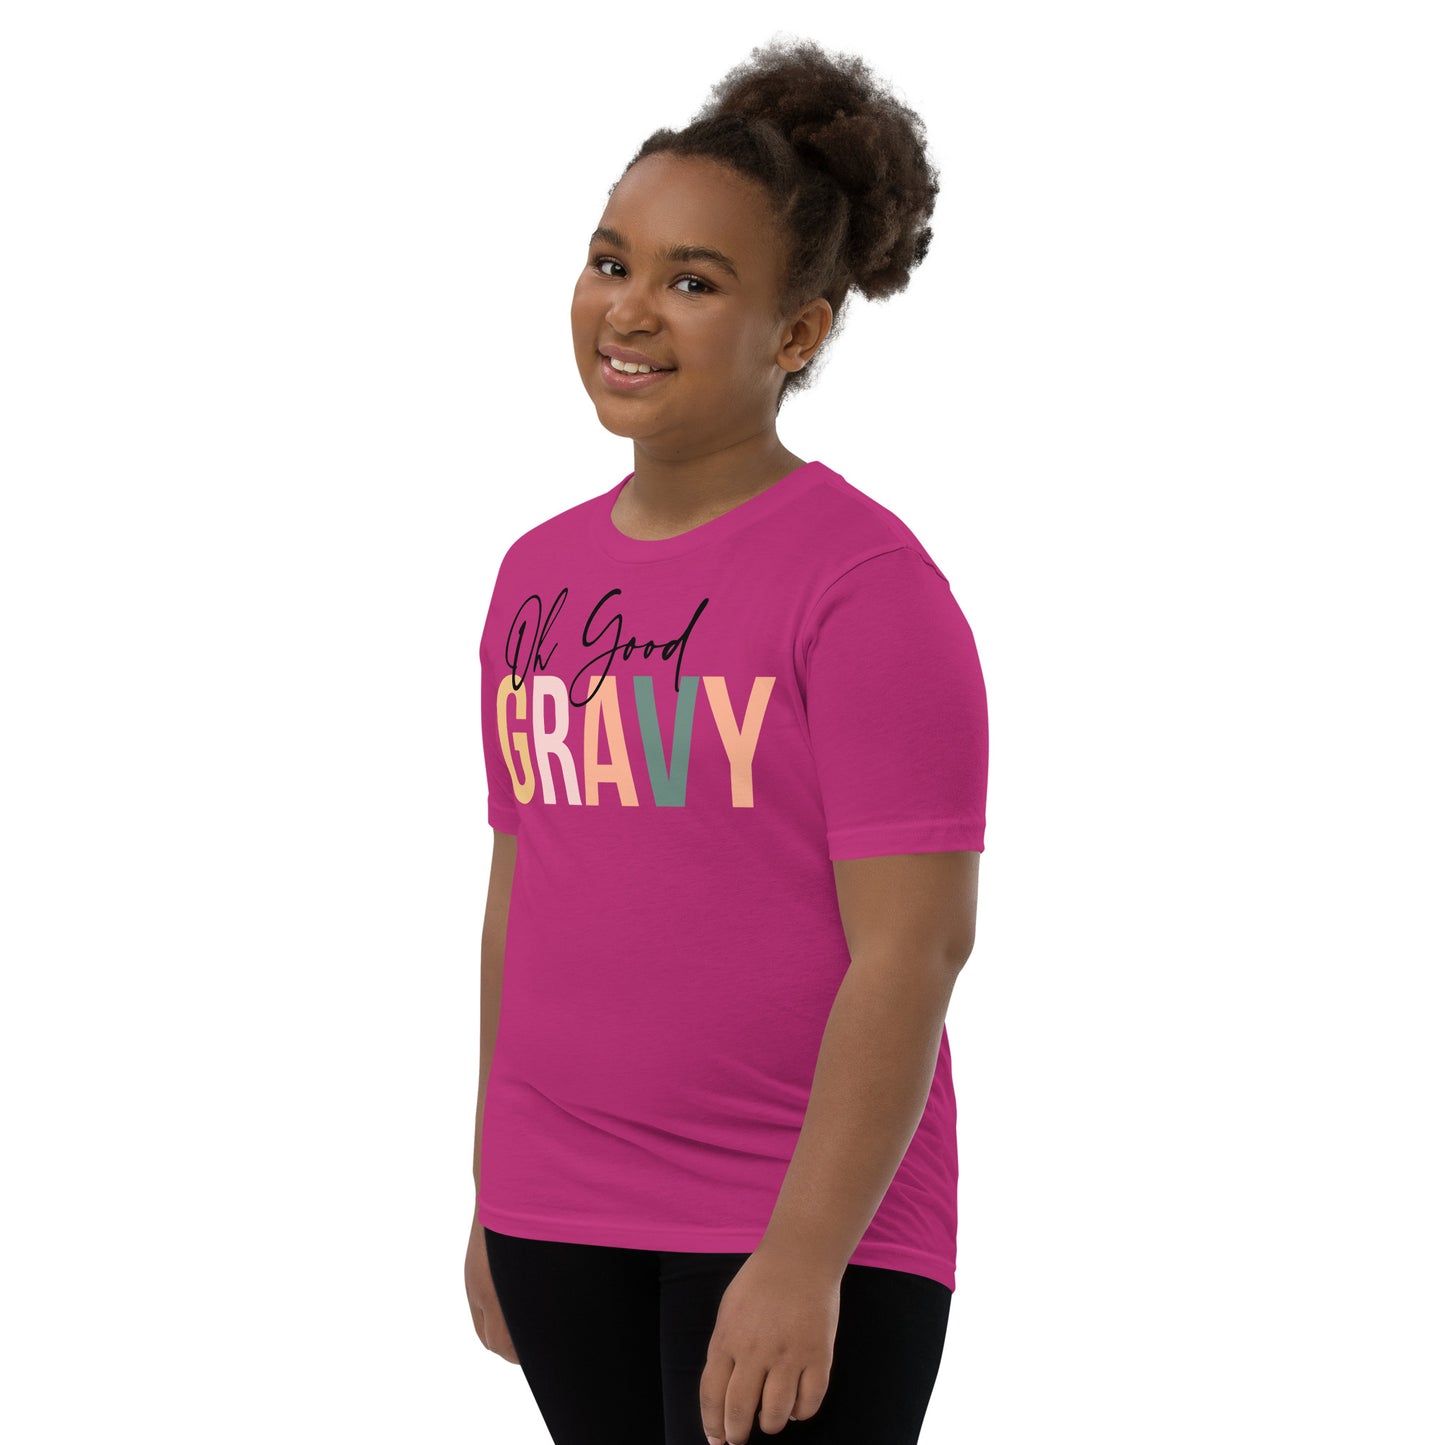 Oh Good Gravy / Kids T-Shirt